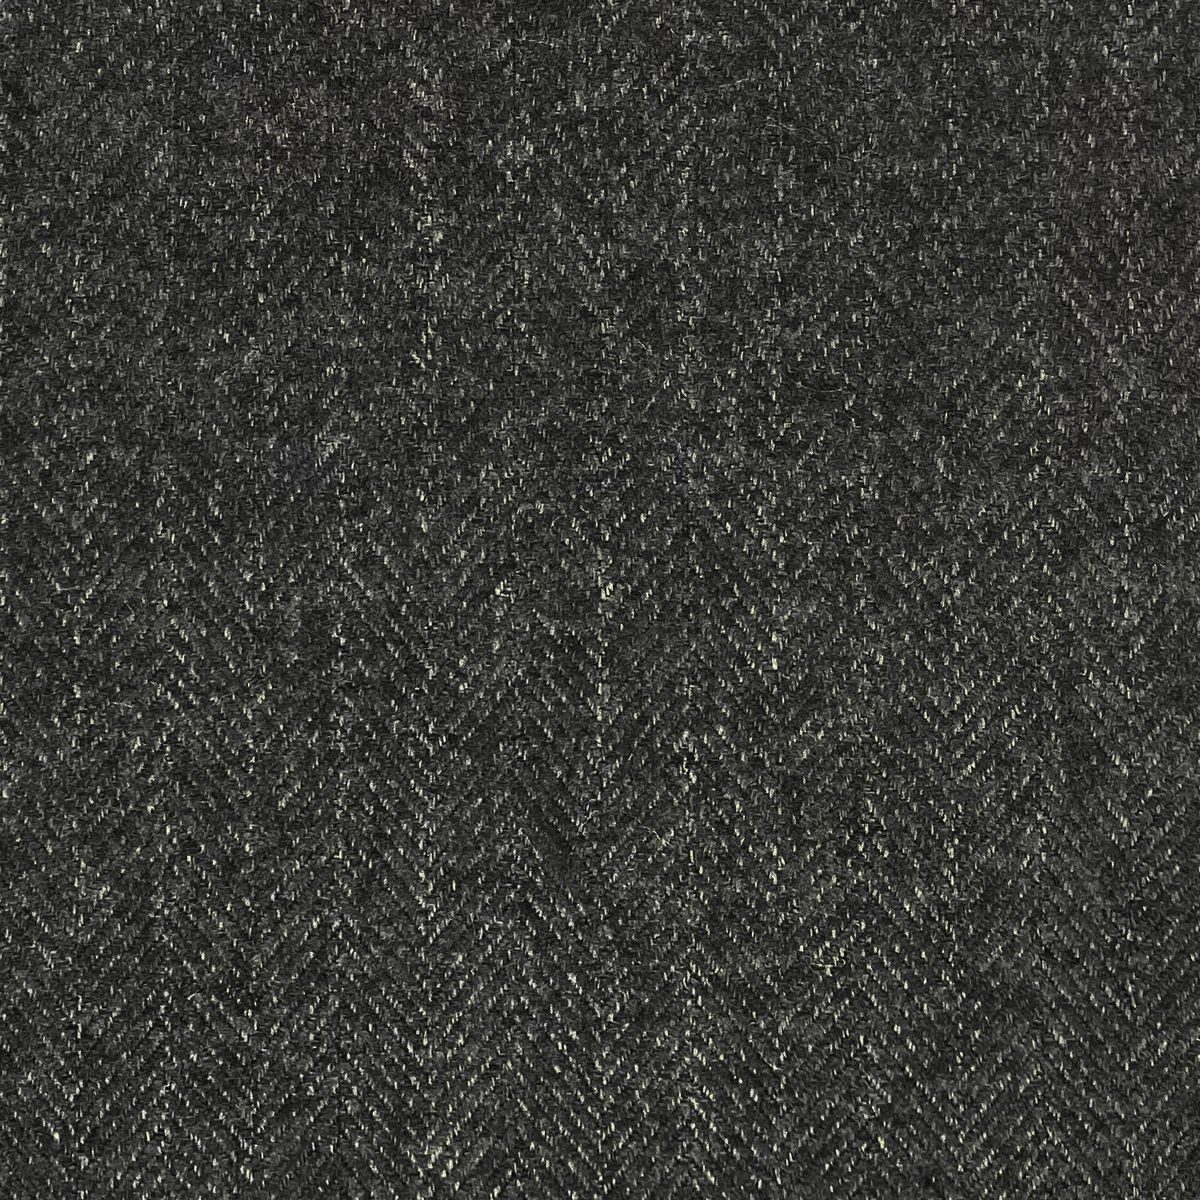 Tweed Charcoal Fabric by Chatham Glyn